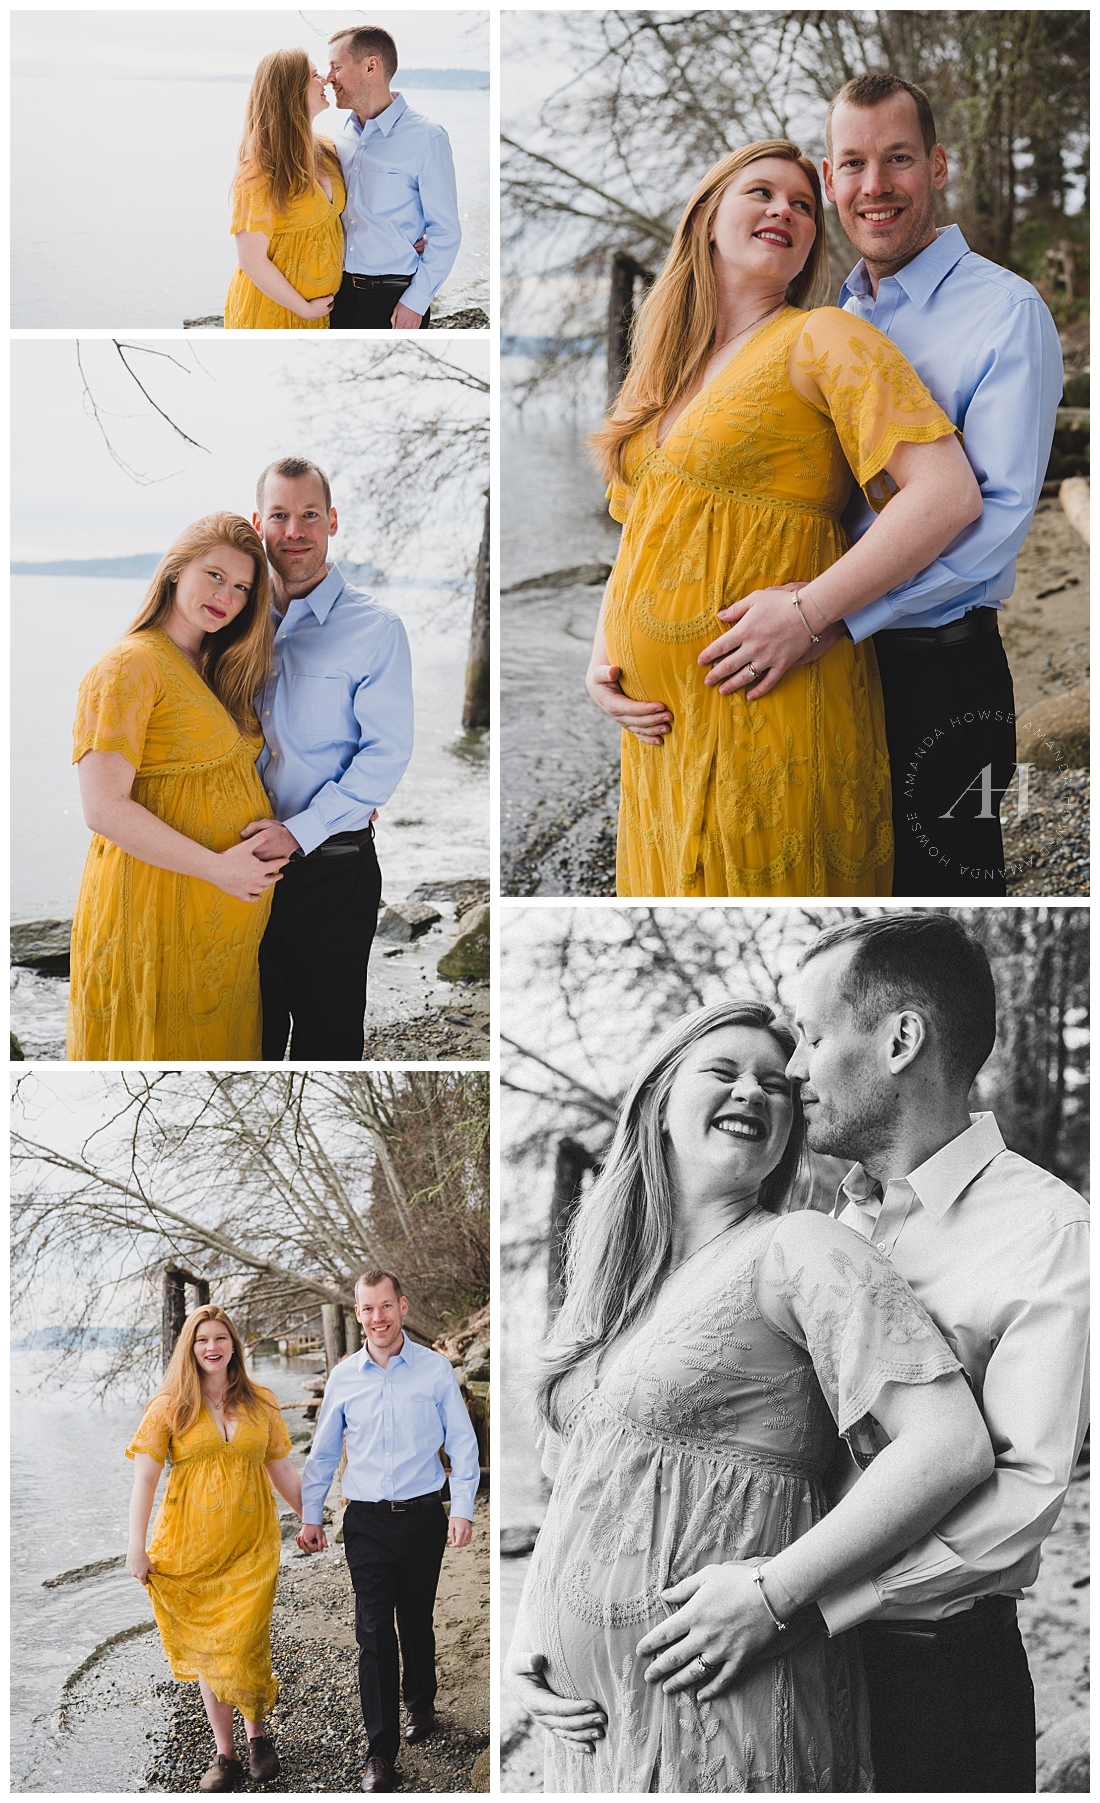 Hannah and Matt Maternity Shoot | Cute Pose Ideas For Expecting Parents | Photographed by the Best Tacoma, Washington Maternity Photographer Amanda Howse Photography